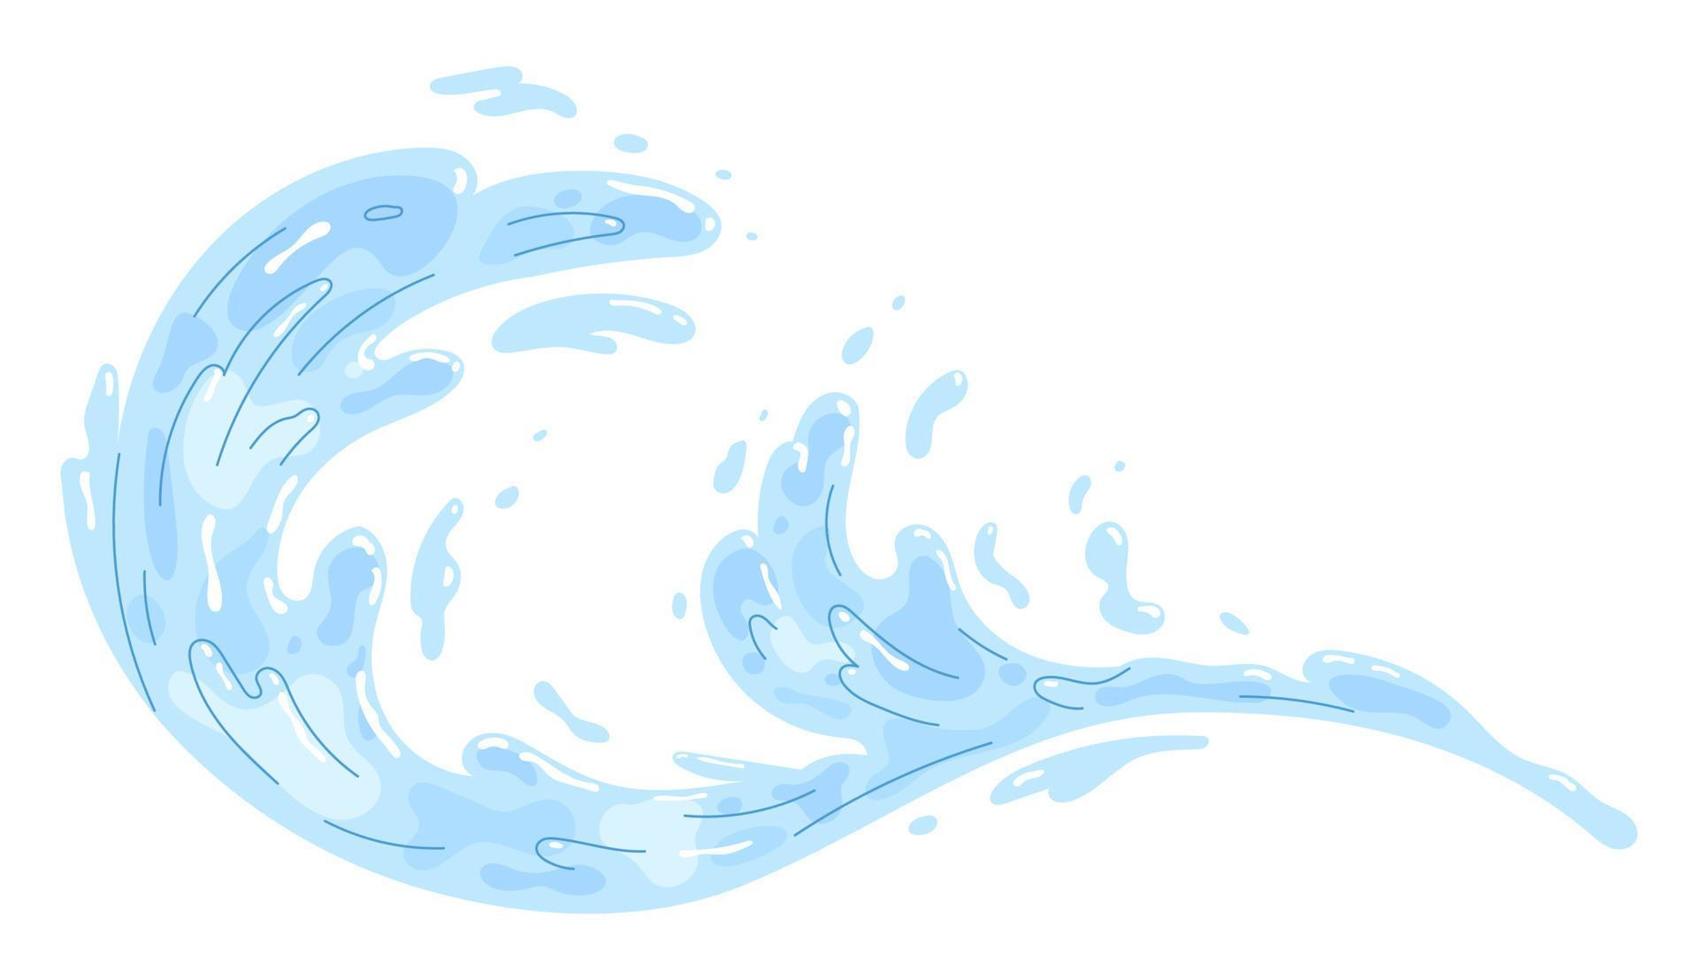 Splash of water, wave figure.  illustration vector